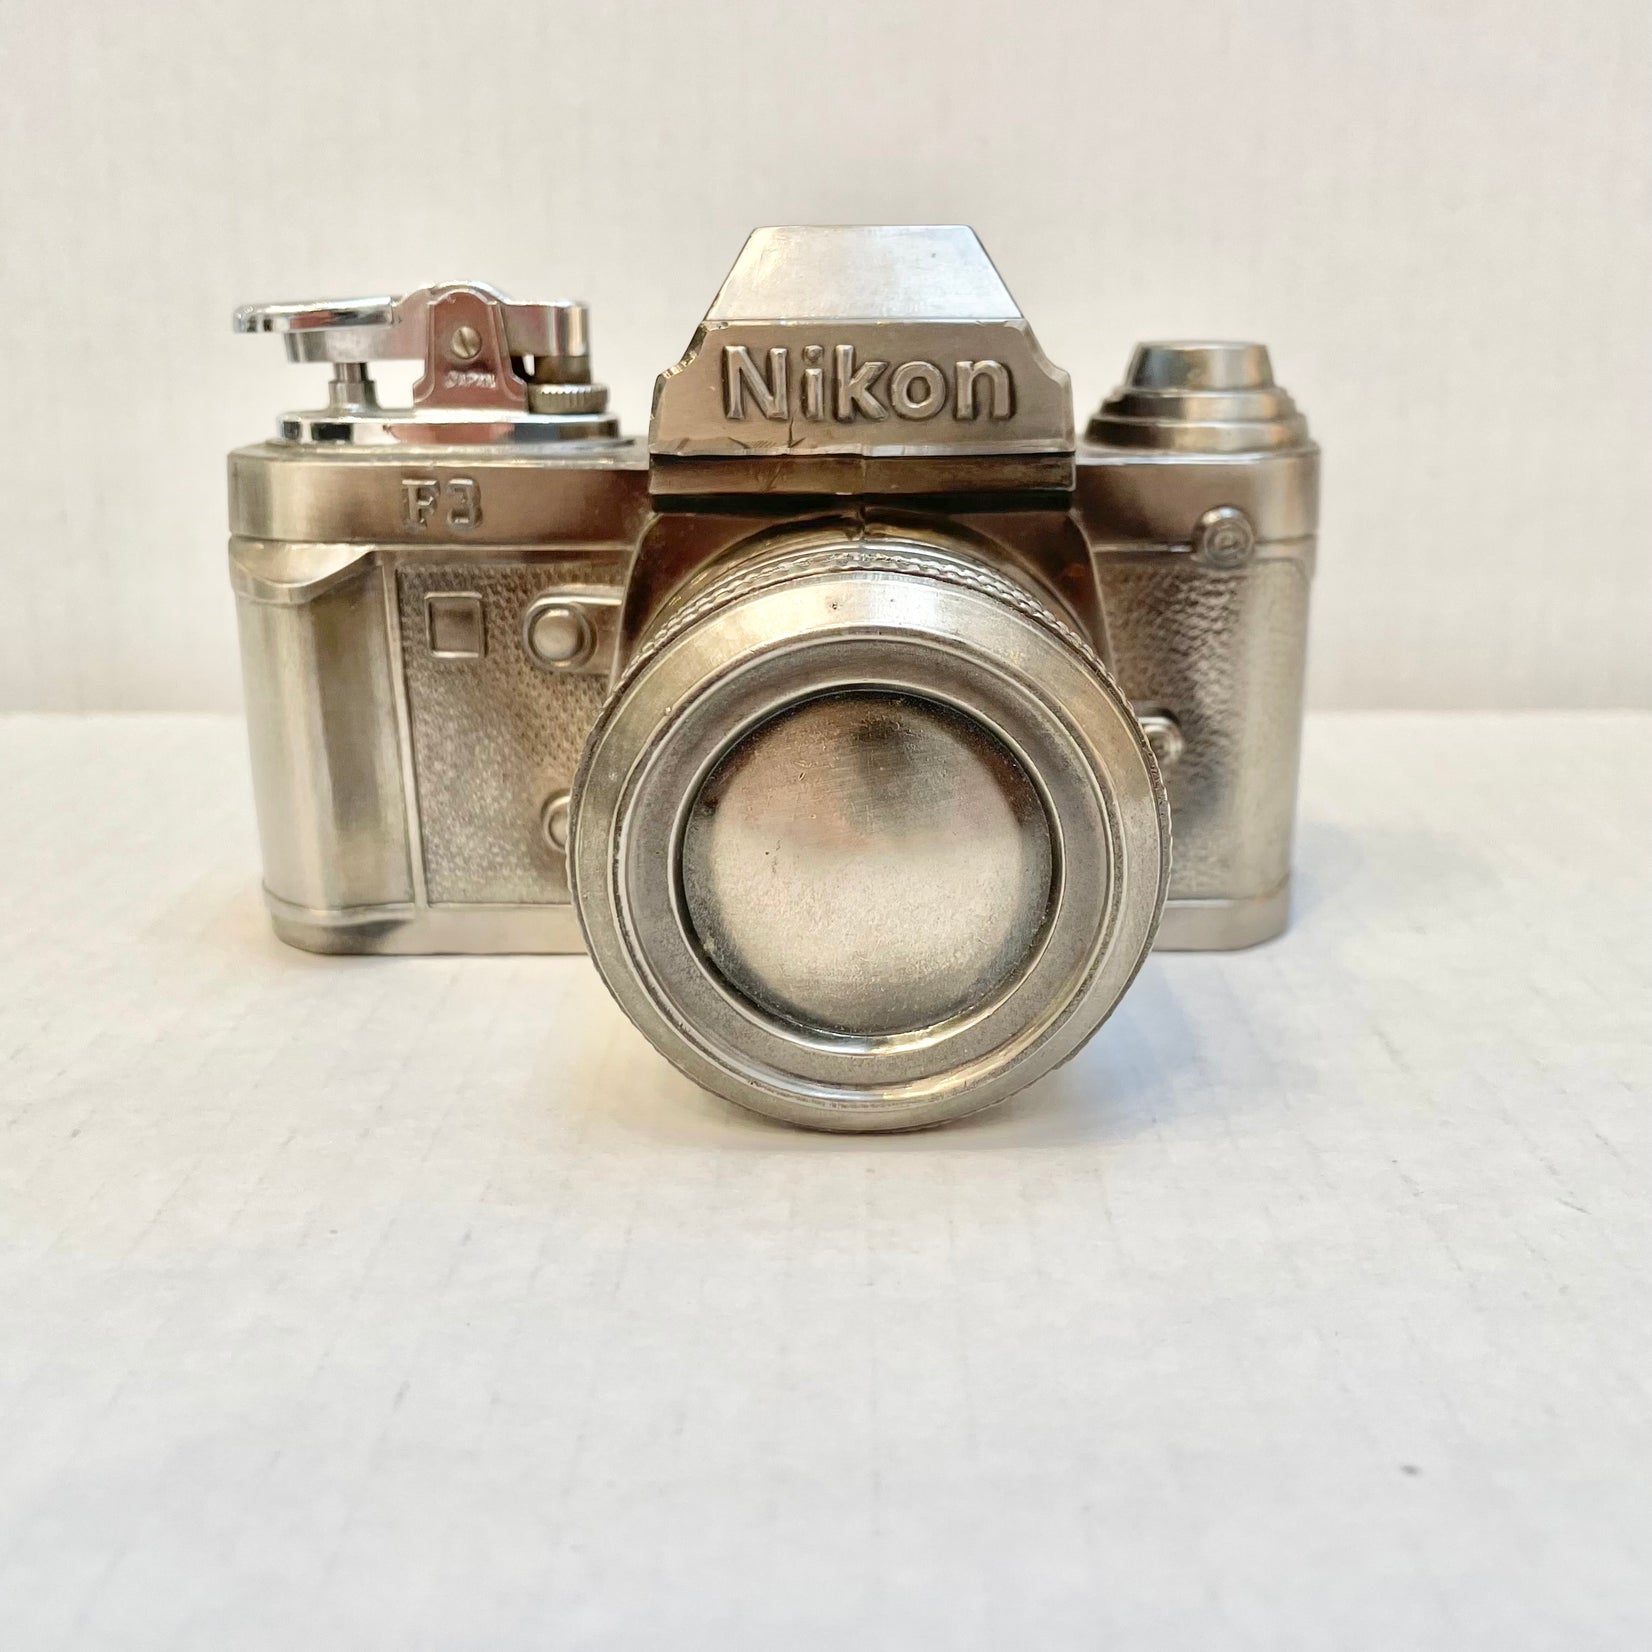 Nikon Camera Lighter, 1980s Japan